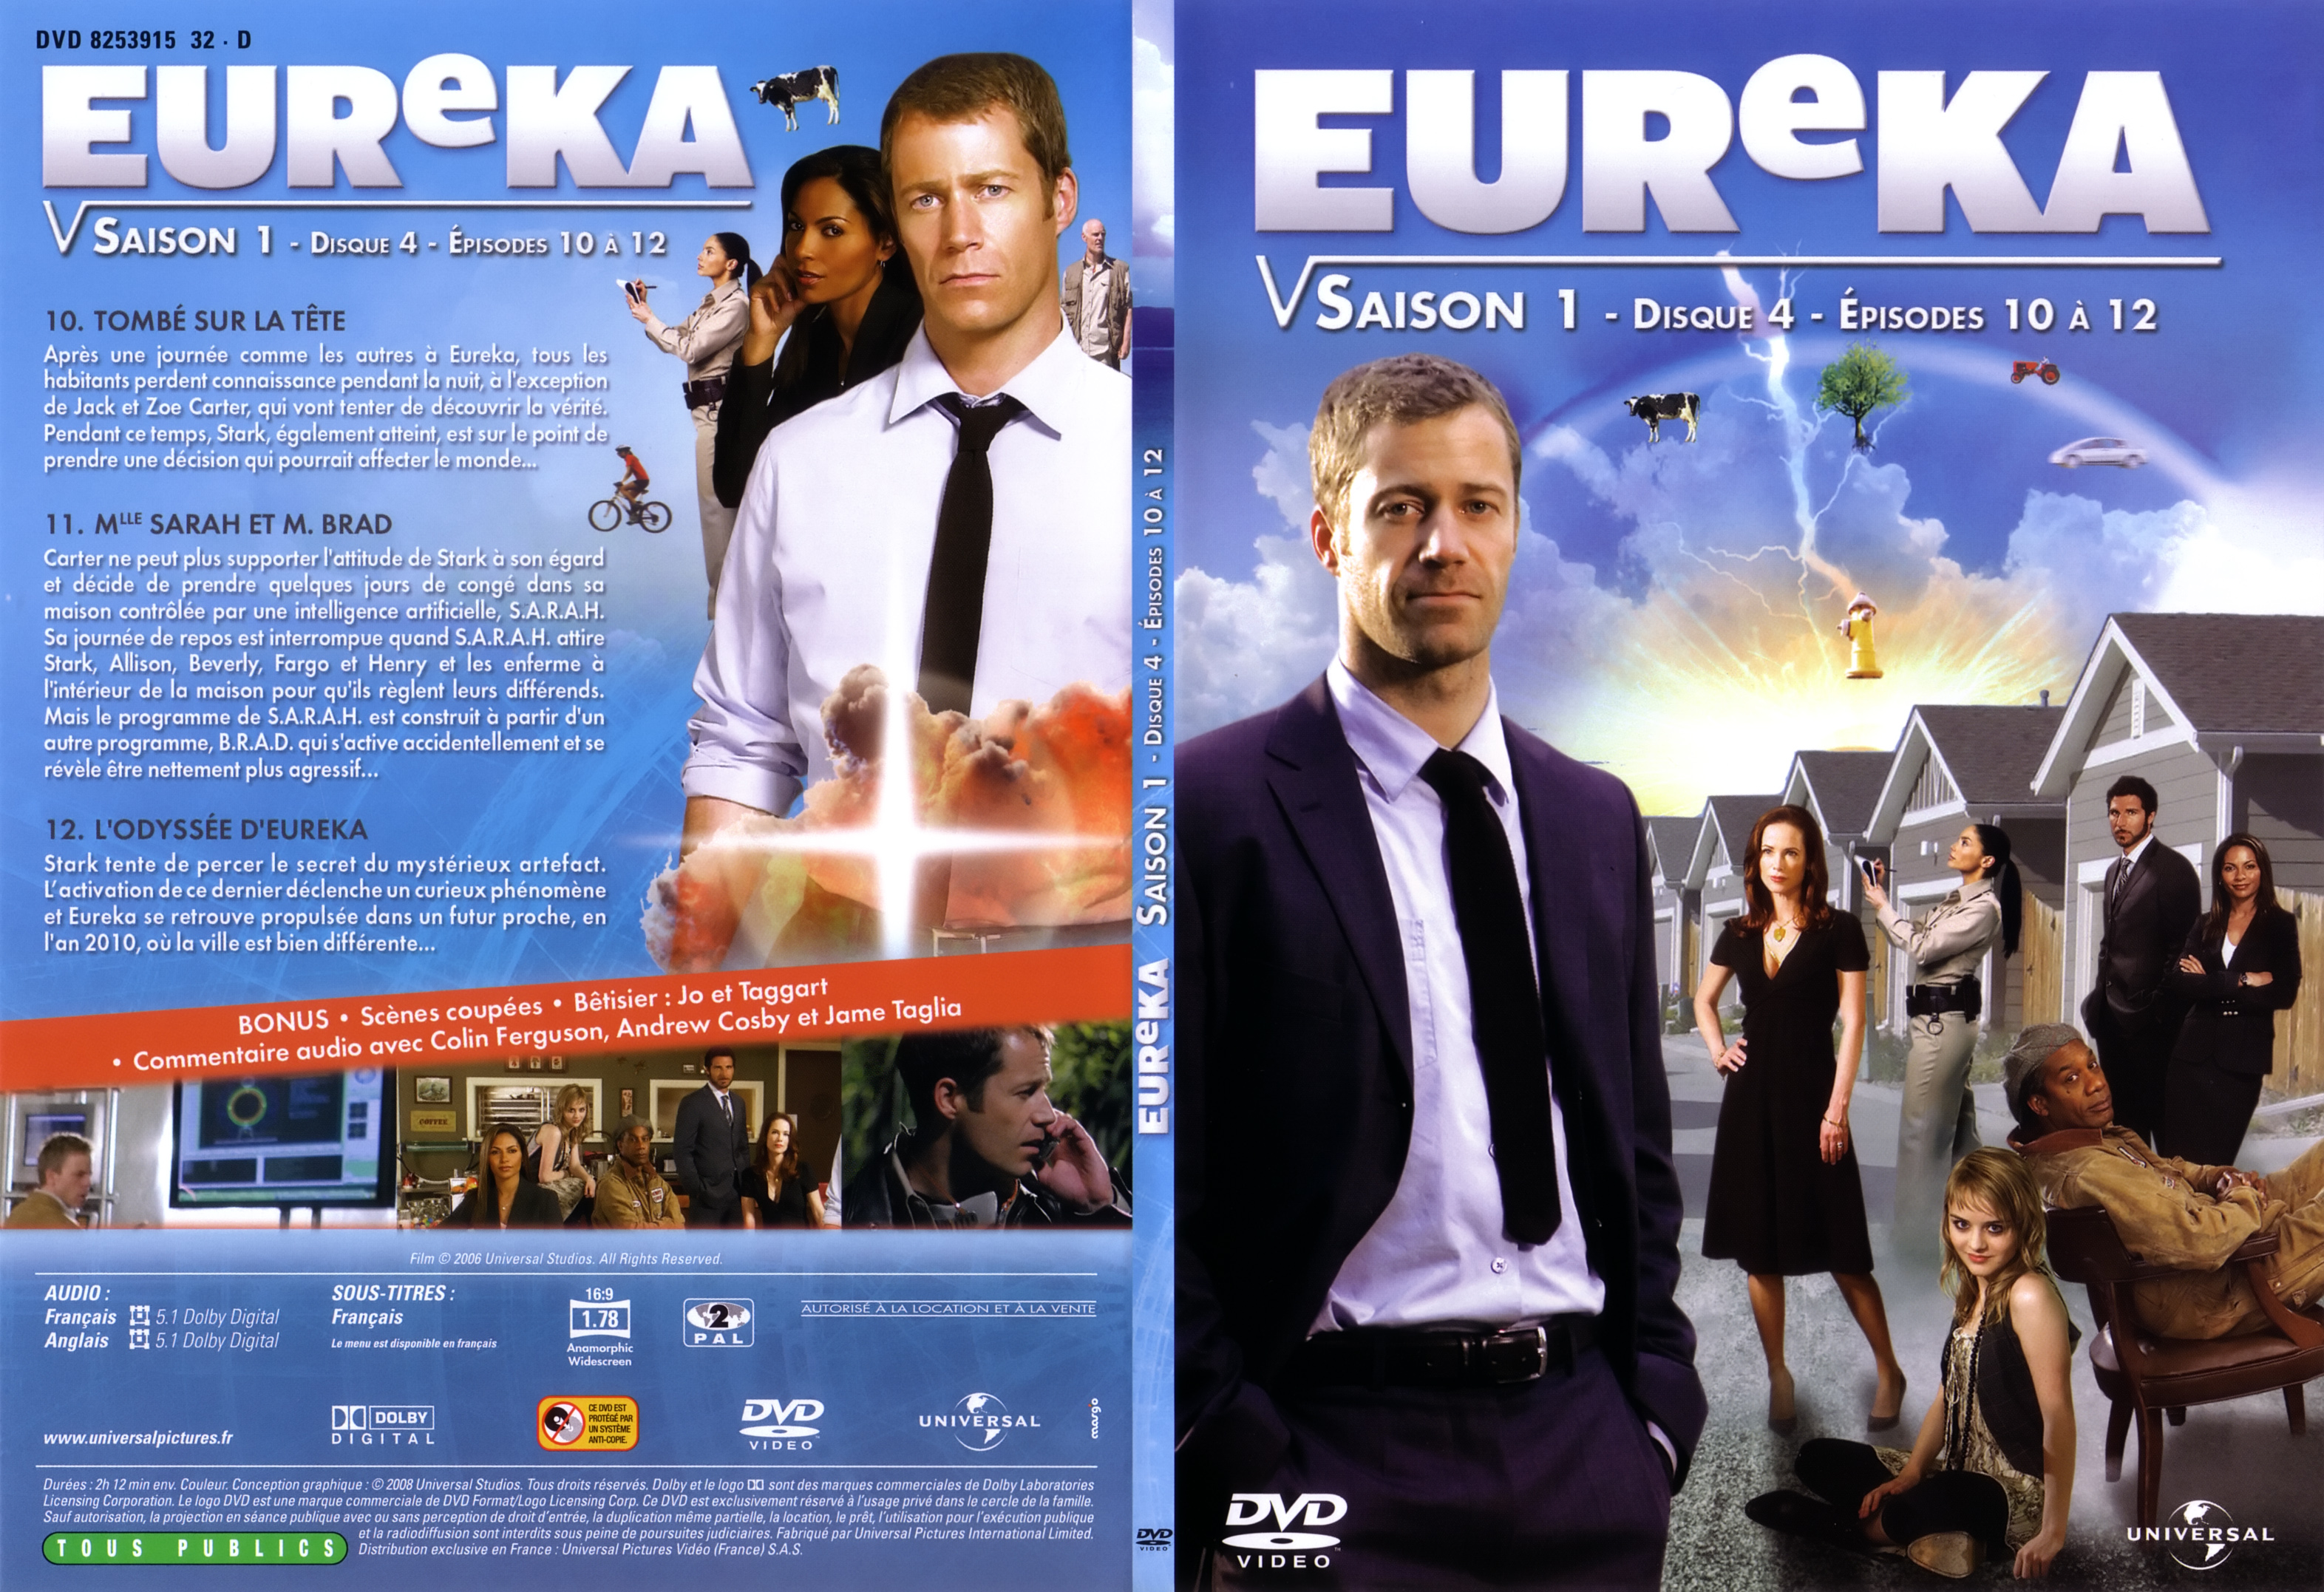 Jaquette DVD Eureka saison 1 DVD 4